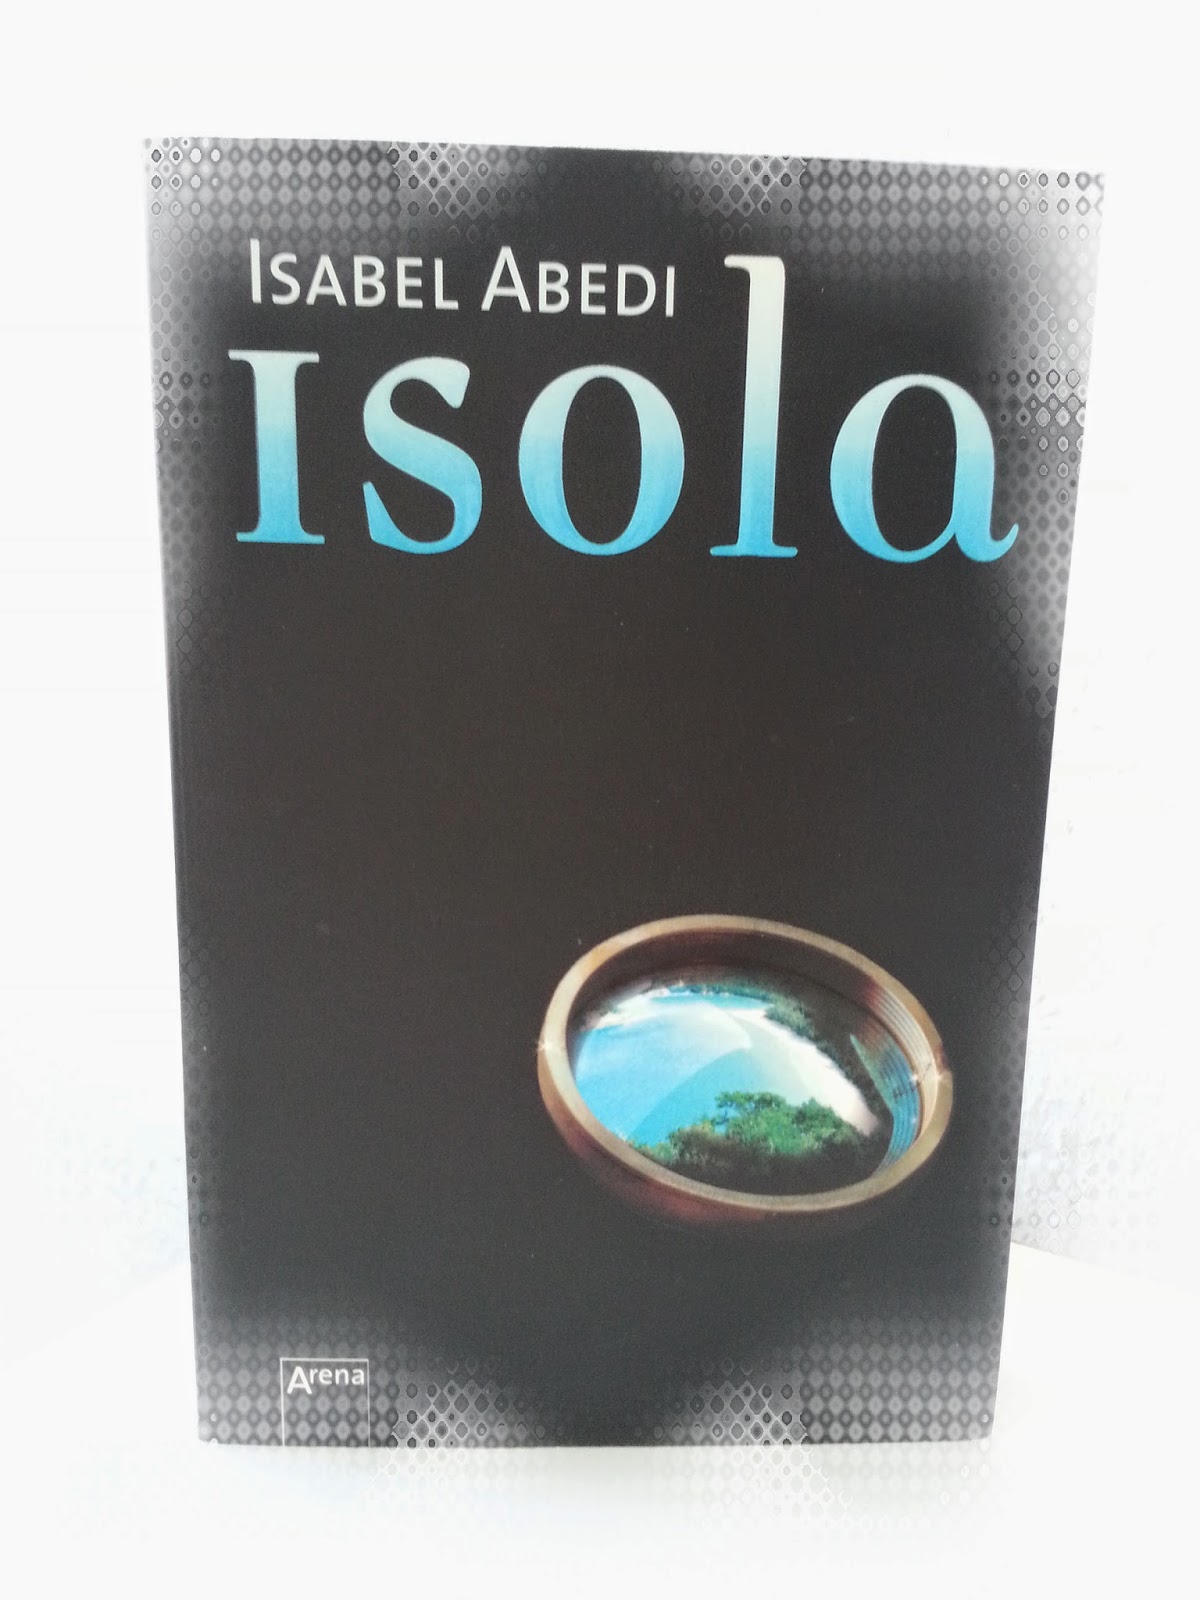 http://www.amazon.de/Isola-Roman-Isabel-Abedi/dp/3401503863/ref=sr_1_1_bnp_1_per?s=books&ie=UTF8&qid=1399922617&sr=1-1&keywords=isola